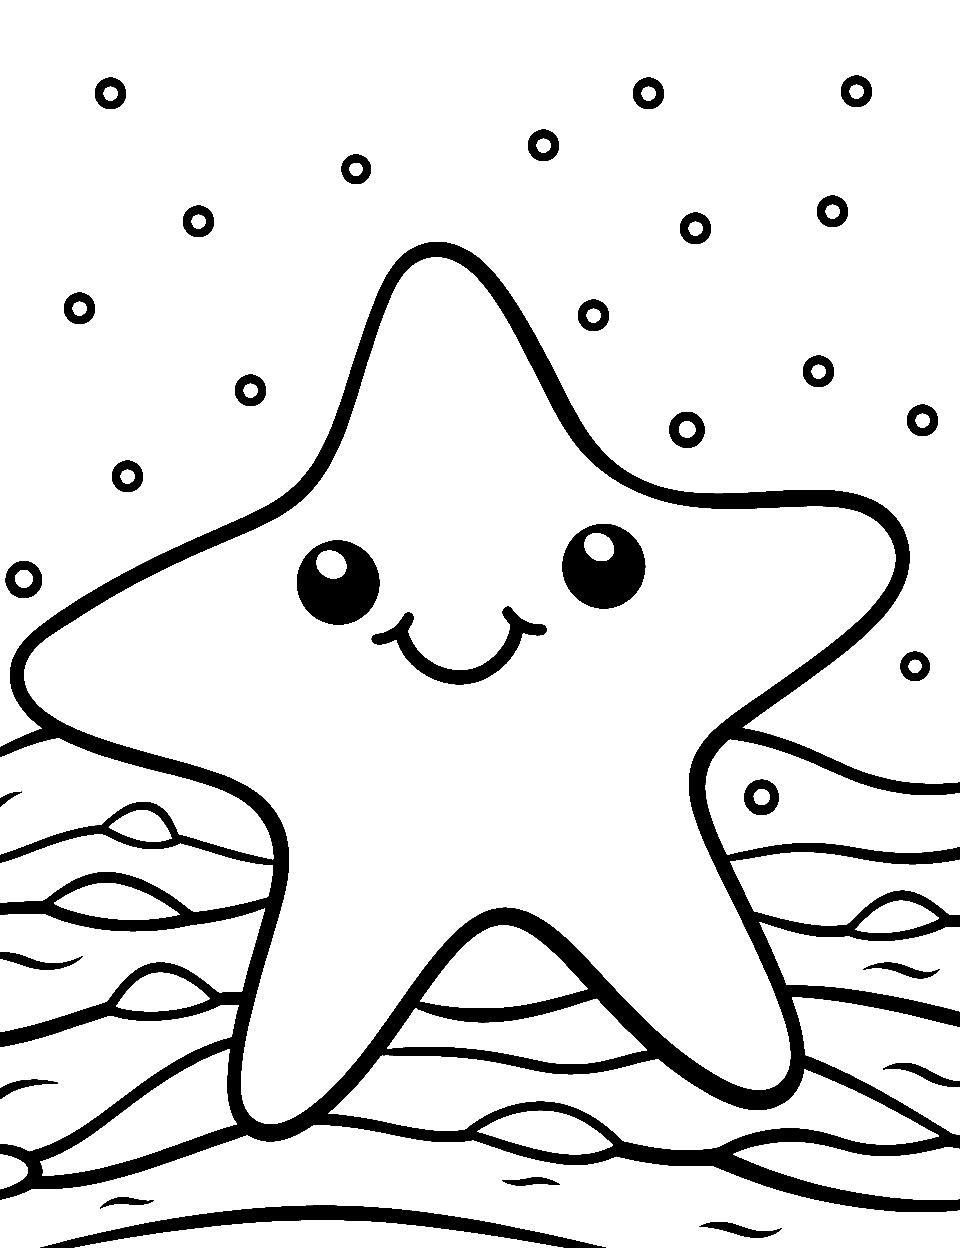 Kawaii Starfish on the Beach Ocean Coloring Page - A cute, kawaii cartoon-style starfish on a sandy beach.